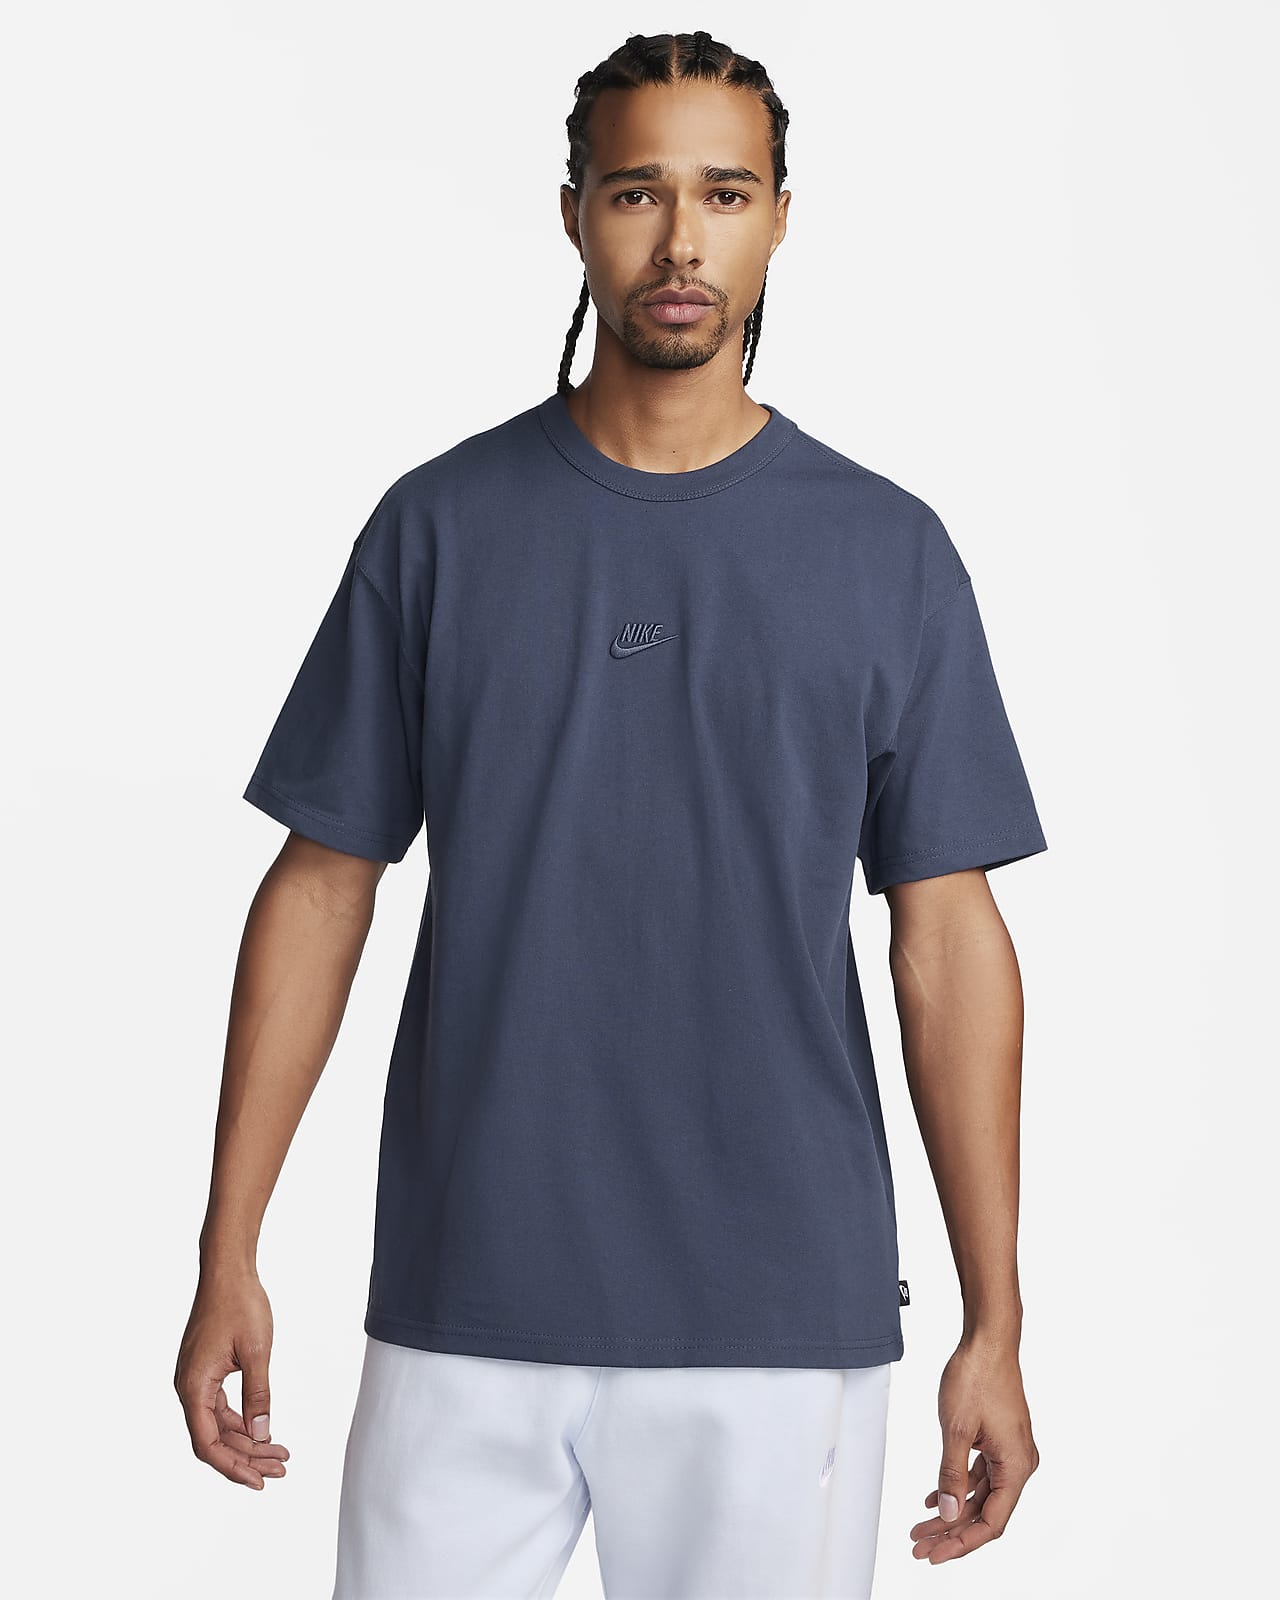 Nike Sportswear Premium Essentials Erkek Tişörtü